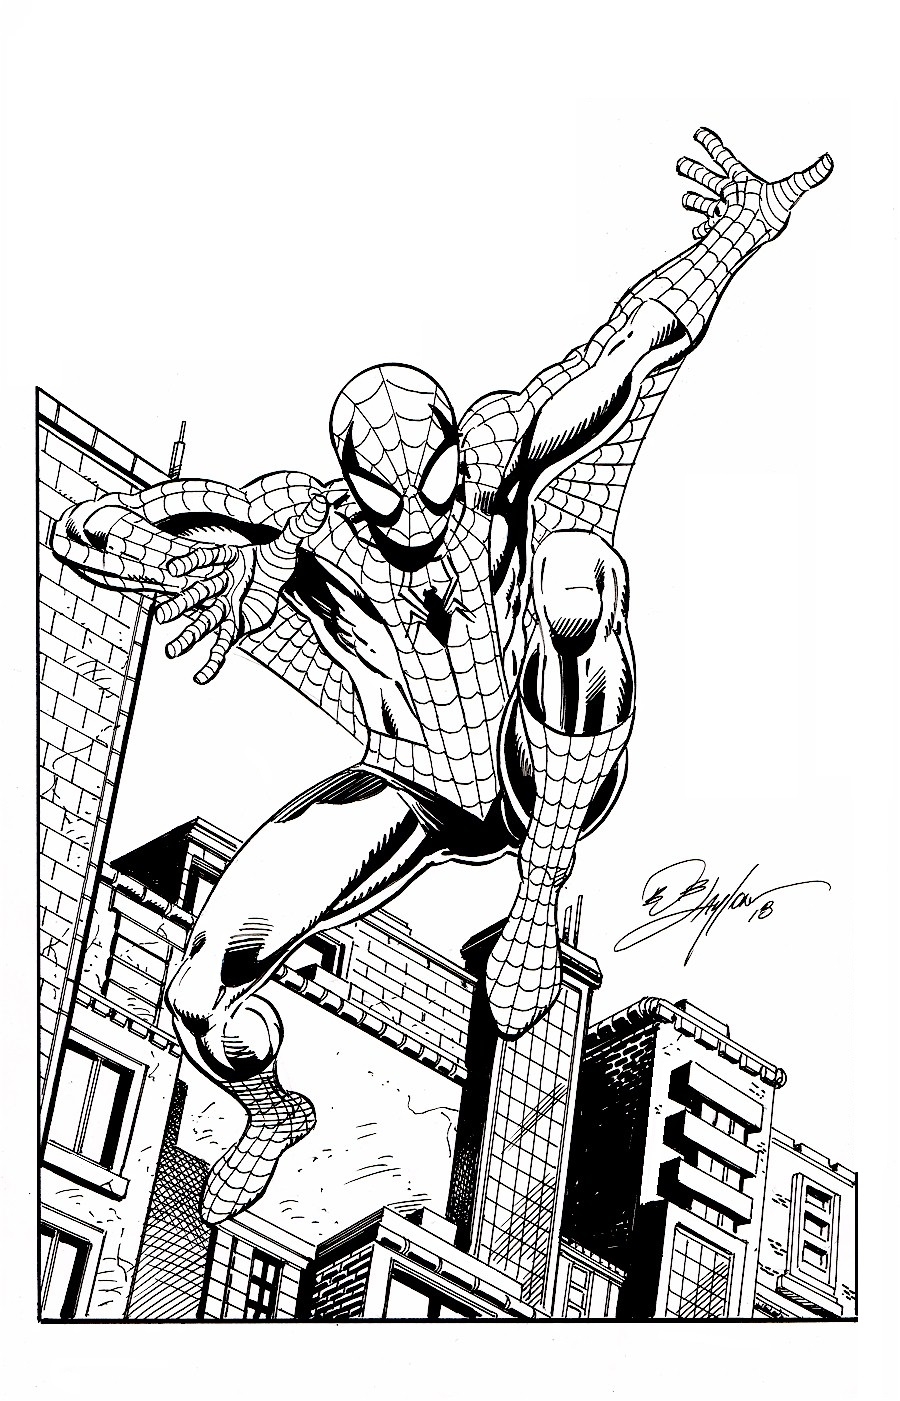 Ishan Dabi - The Amazing Spider-man 3 Concept Poster